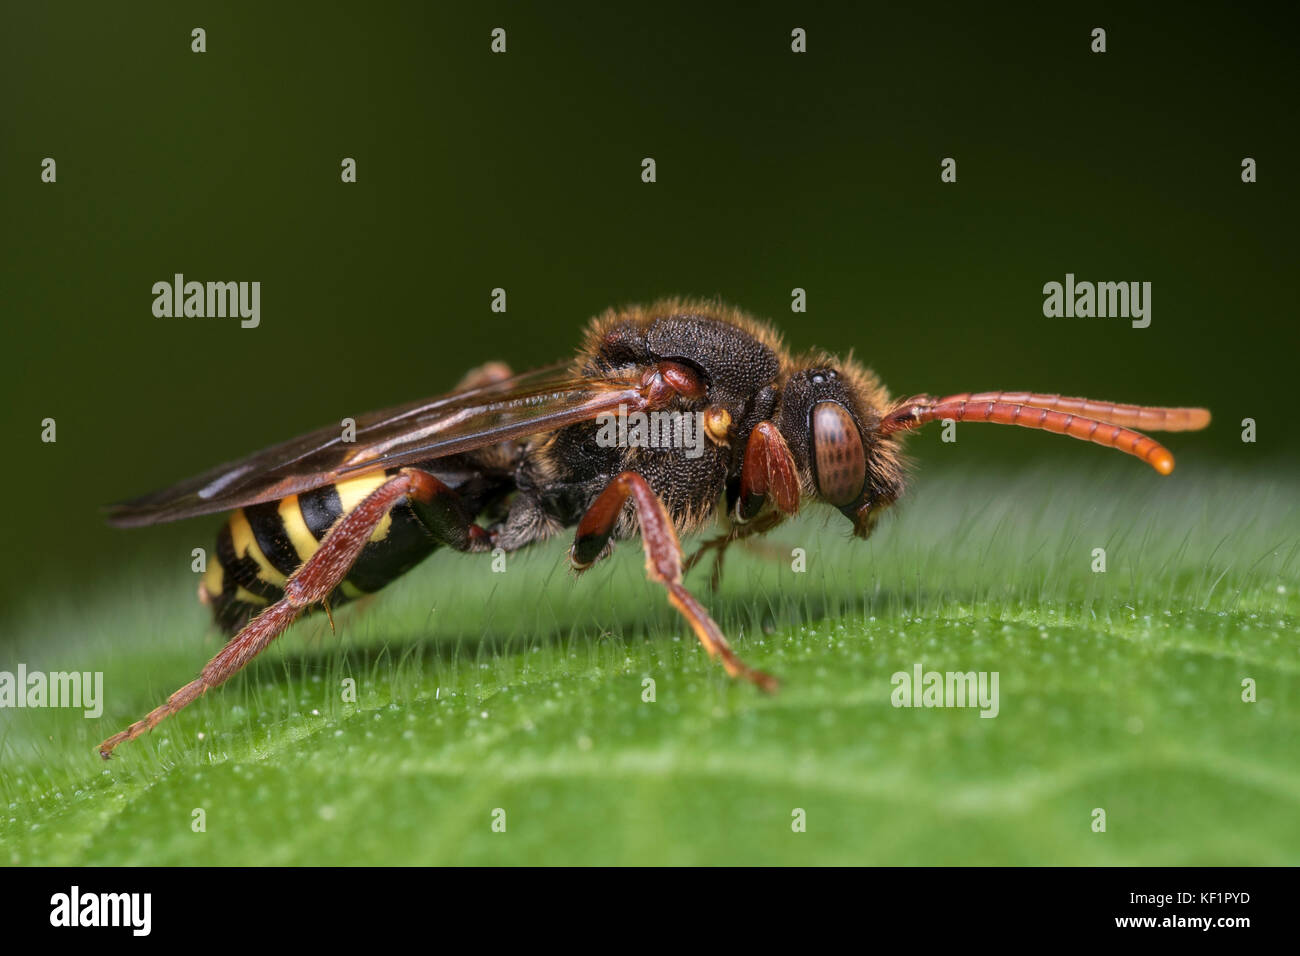 Cuckoo Biene ruht auf Blatt. Tipperary, Irland Stockfoto